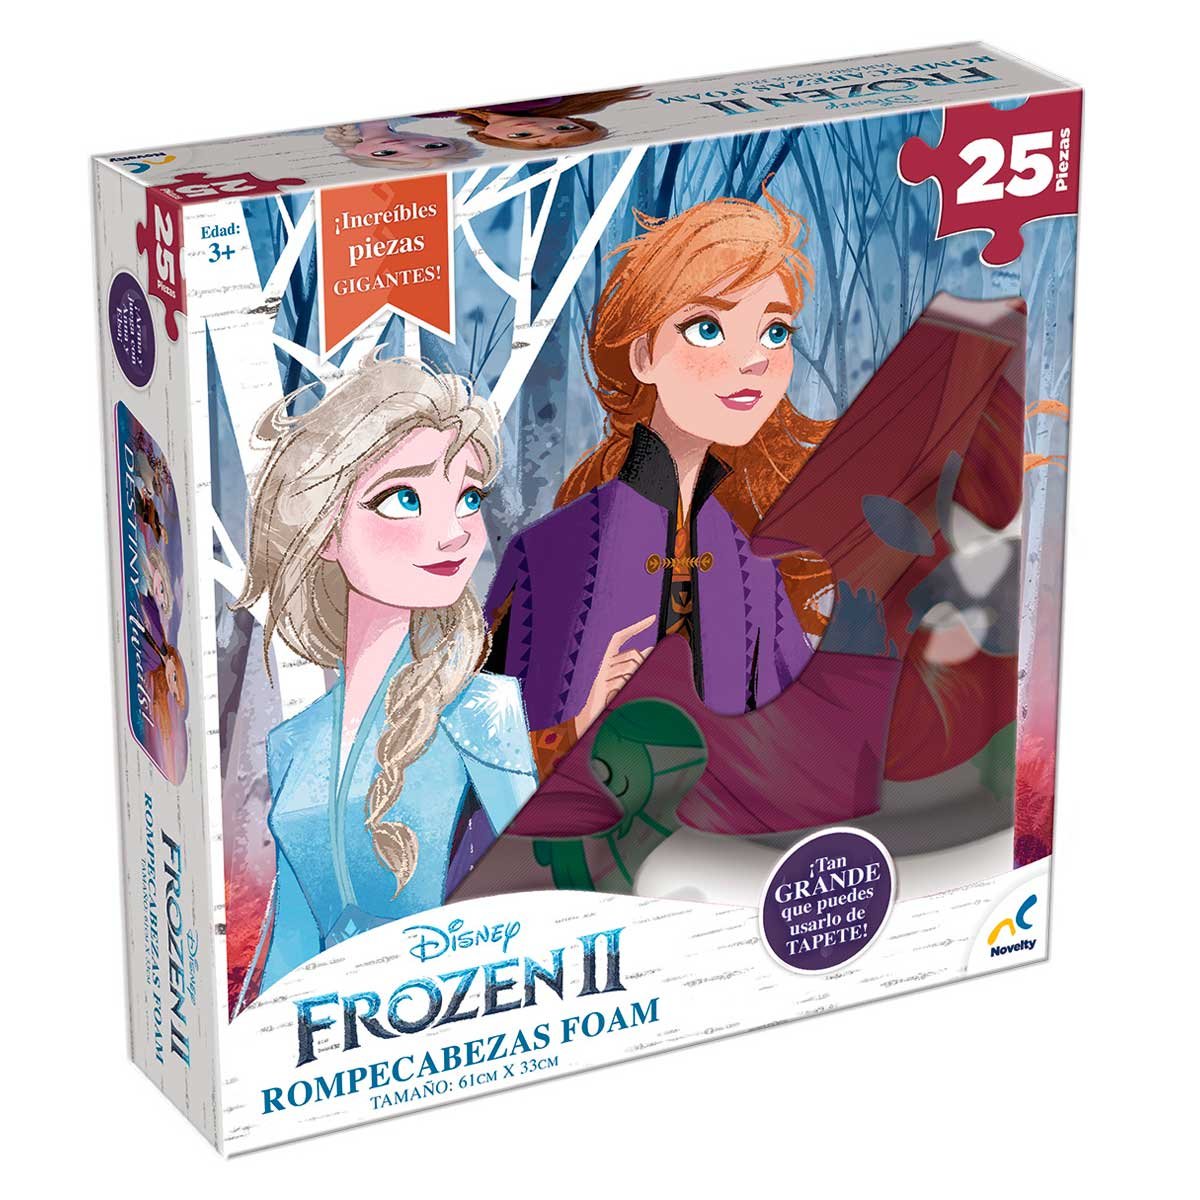 Rompecabezas Foam 25 Piezas Frozen II Novelty